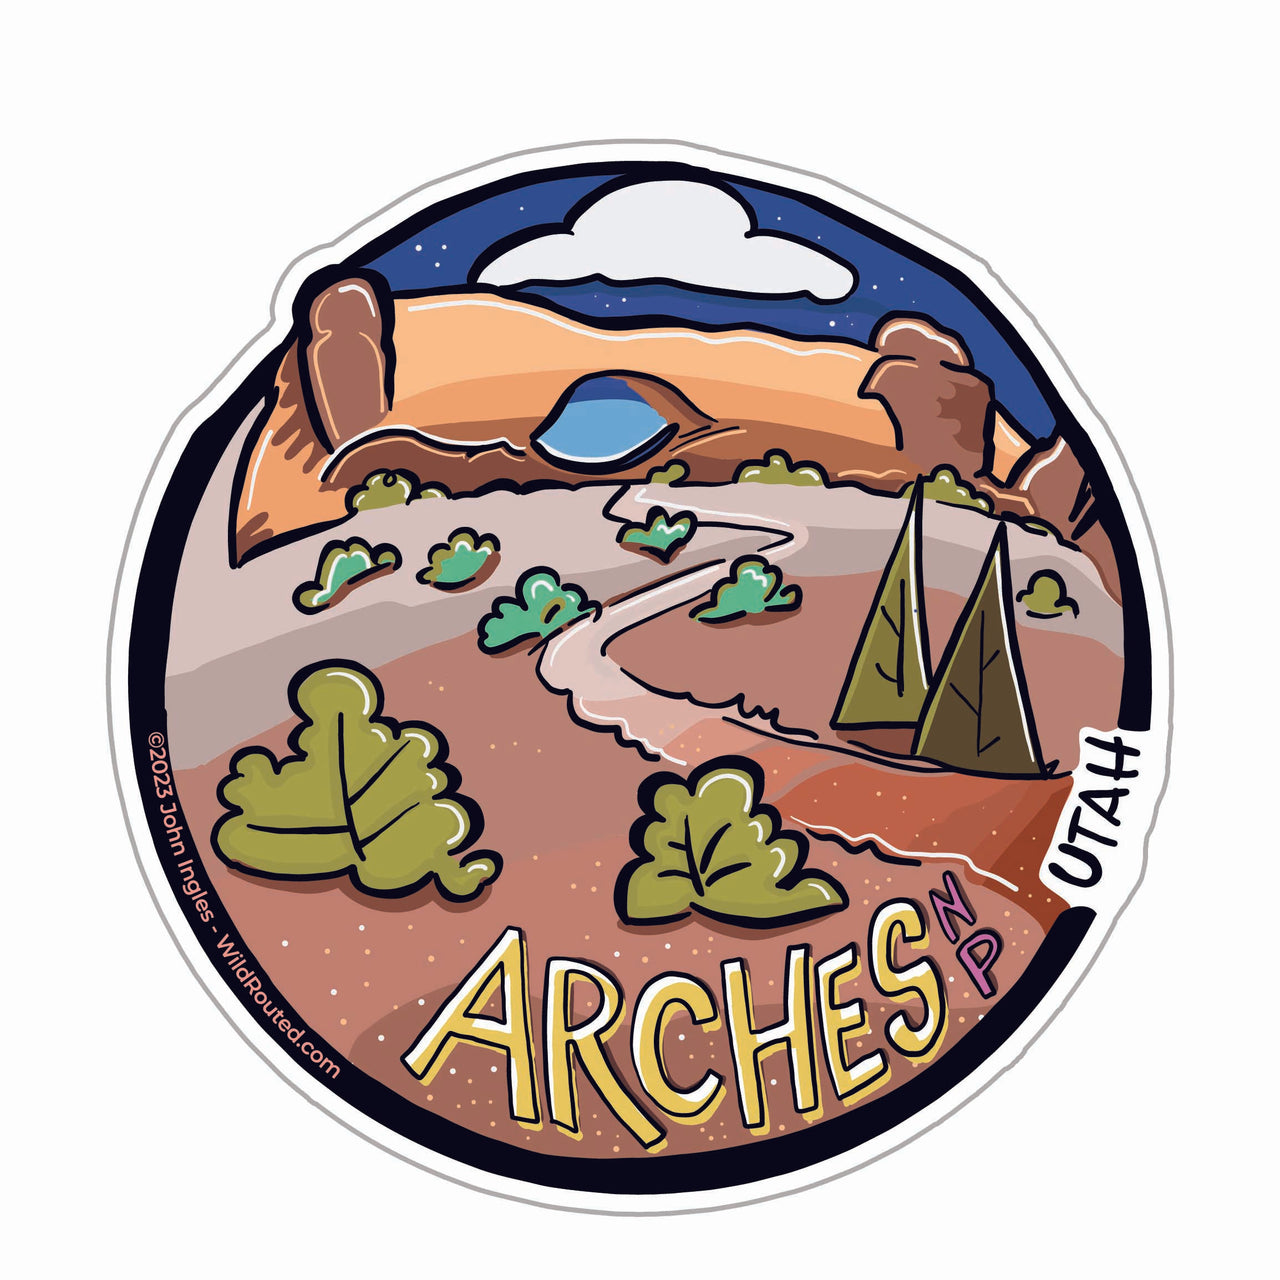 Arches National Park North Window Sticker